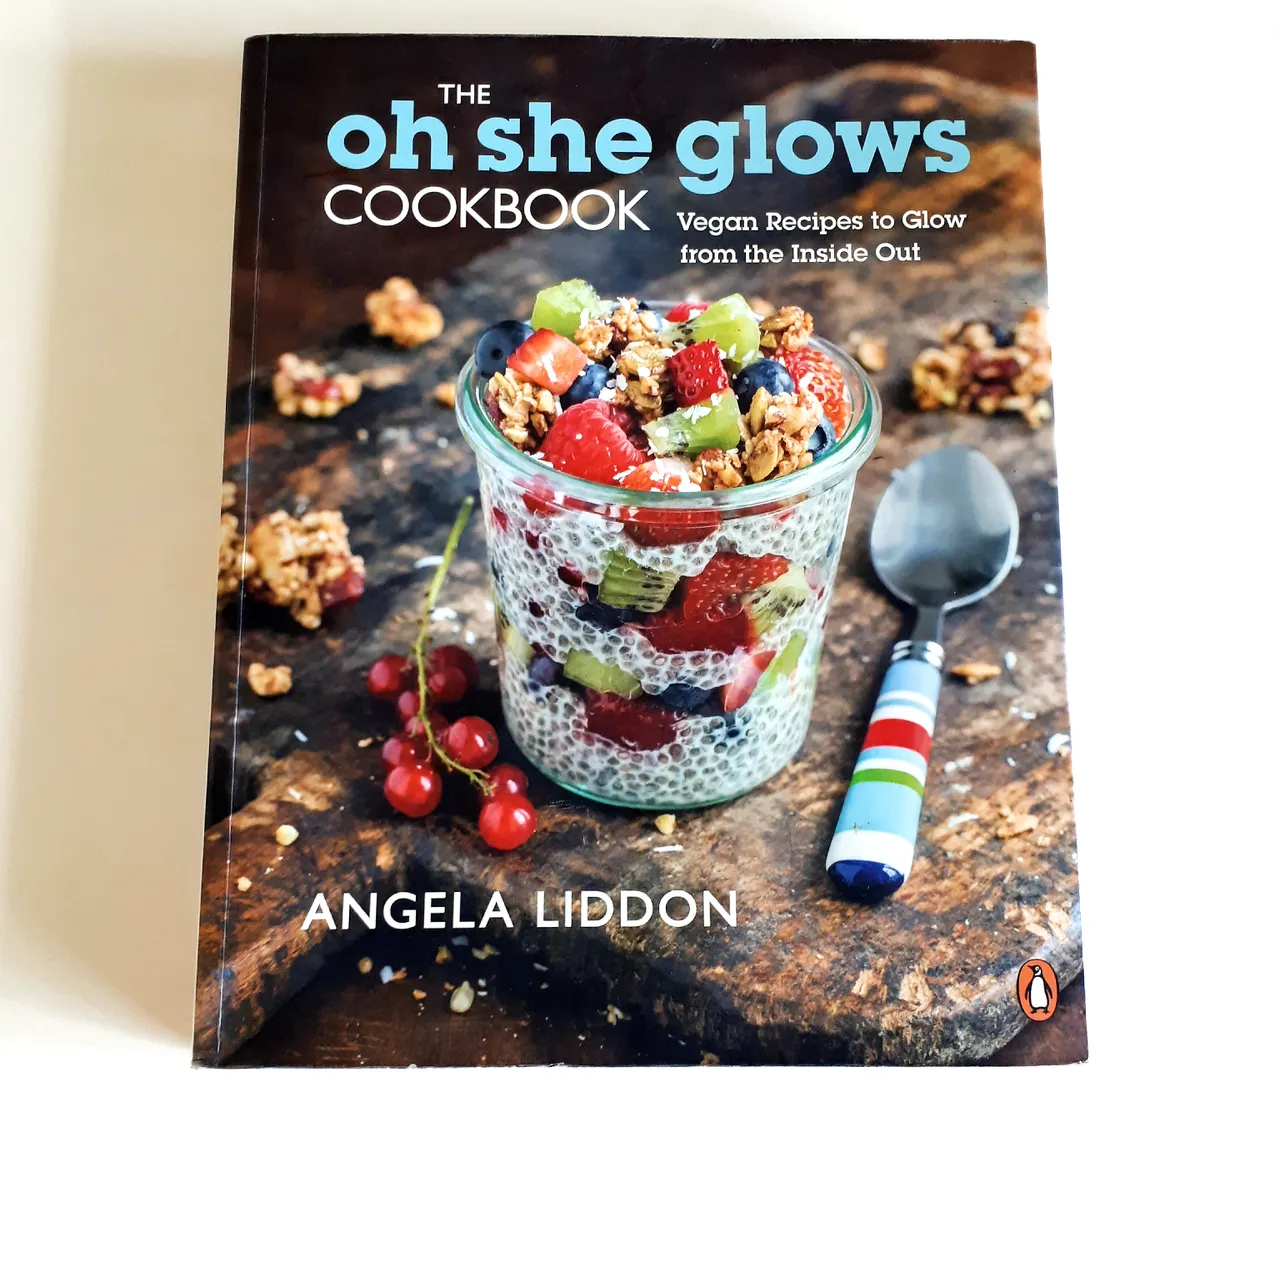 Oh She Glows vegan cookbook by Angela Liddon photo 1